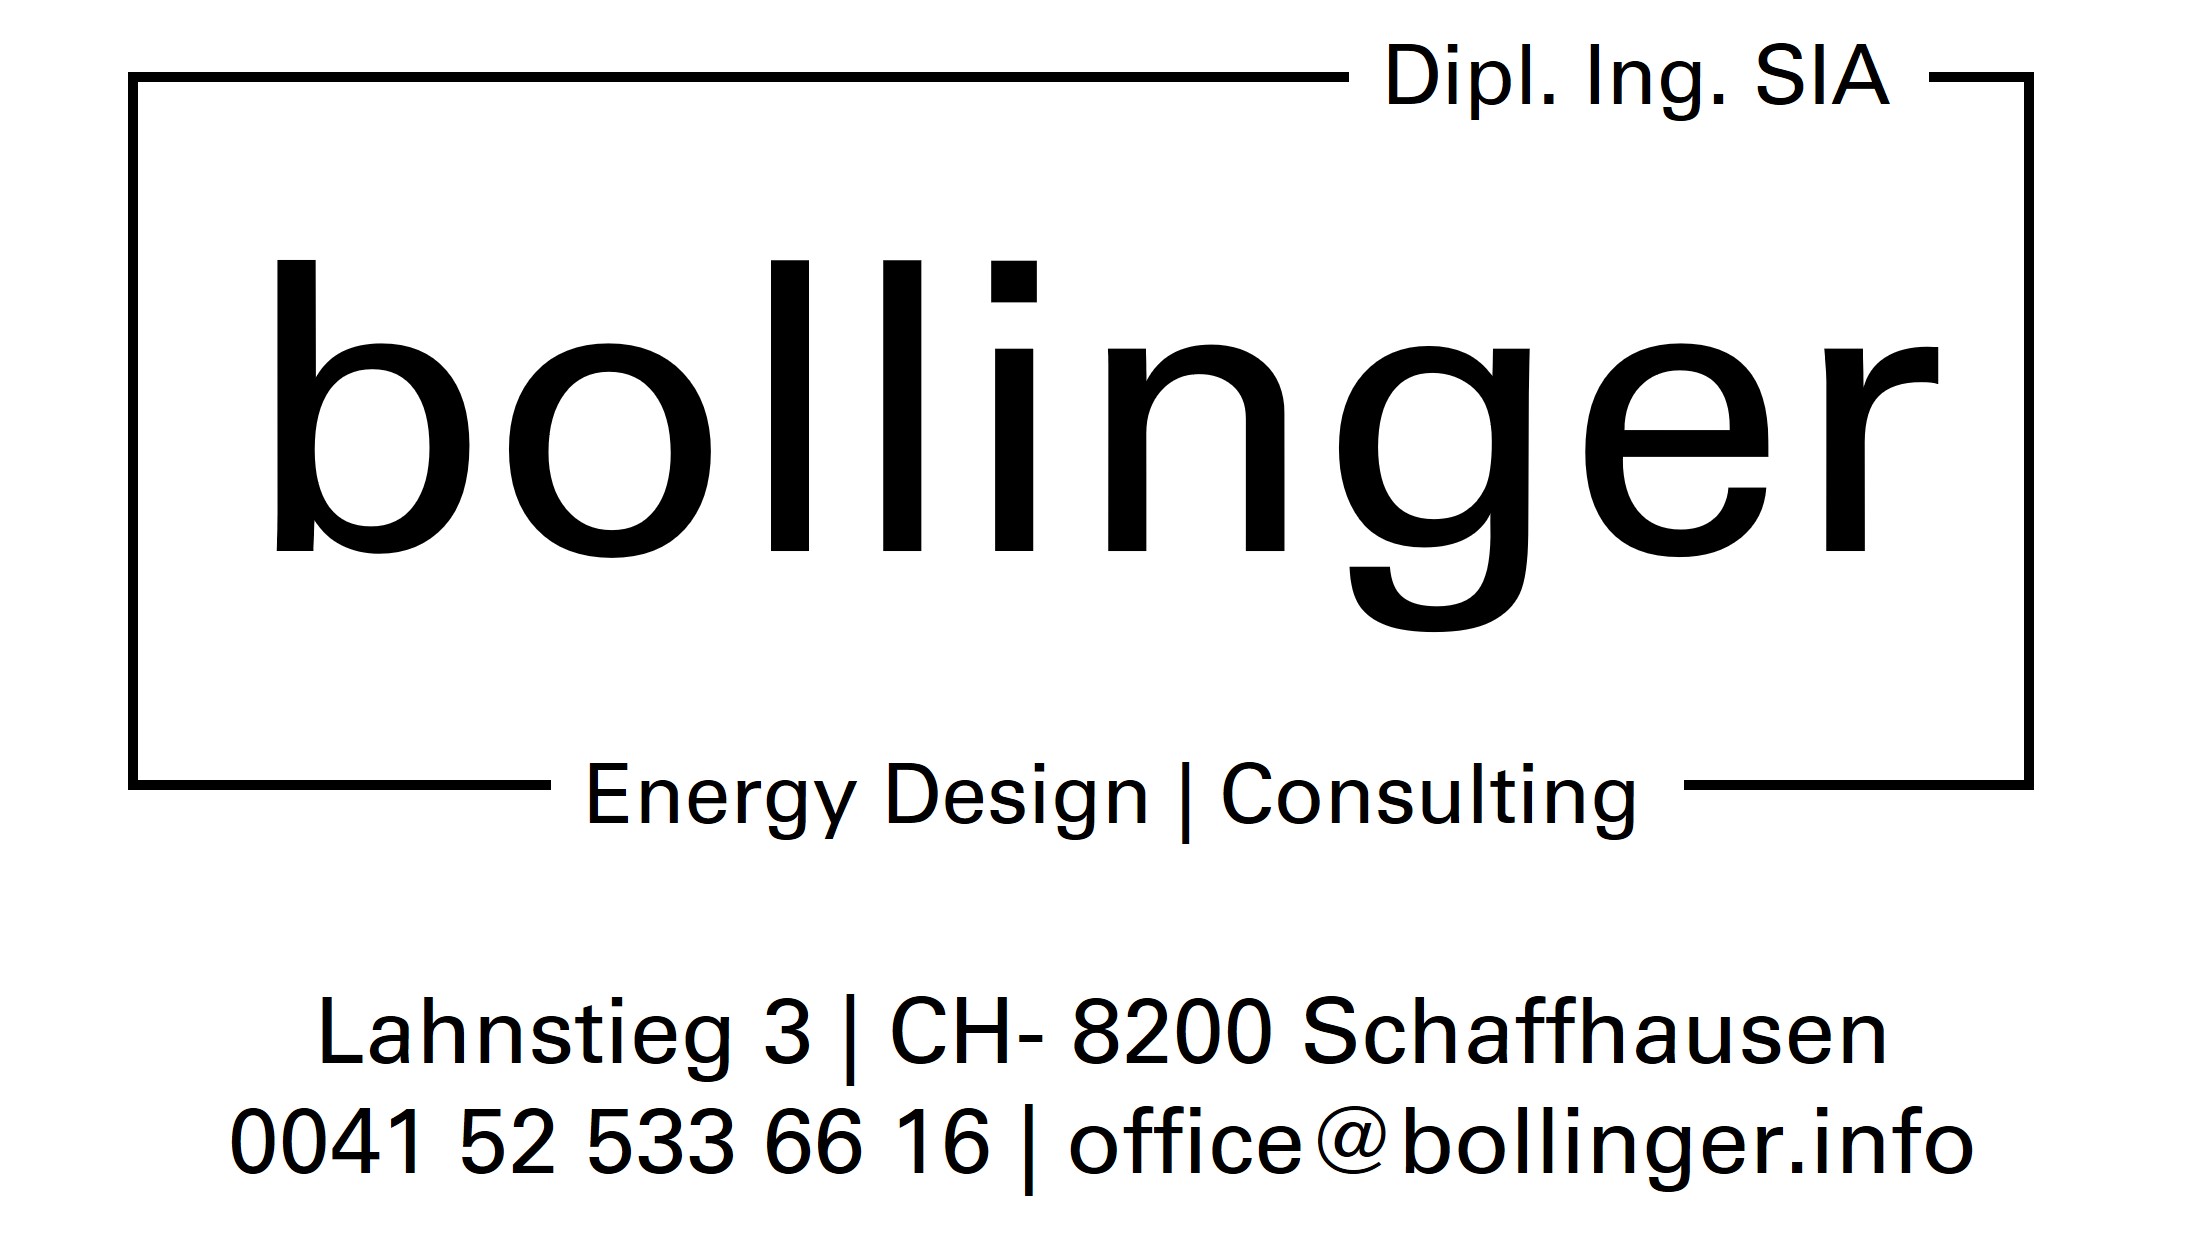 Bollinger Energy Design & Consulting SIA GmbH